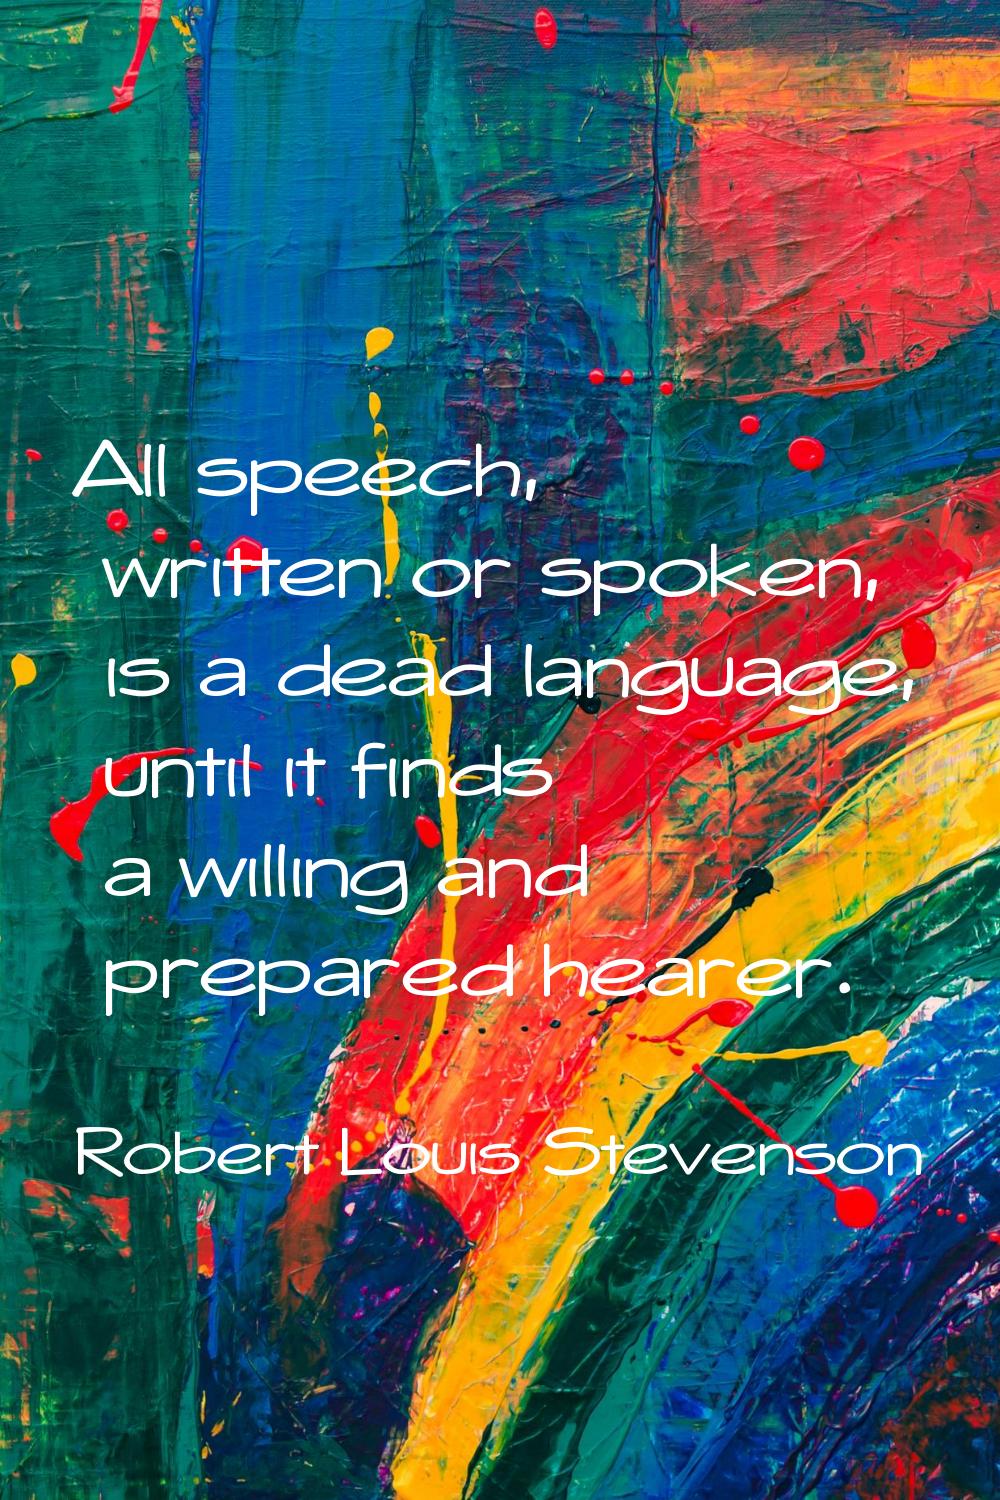 All speech, written or spoken, is a dead language, until it finds a willing and prepared hearer.